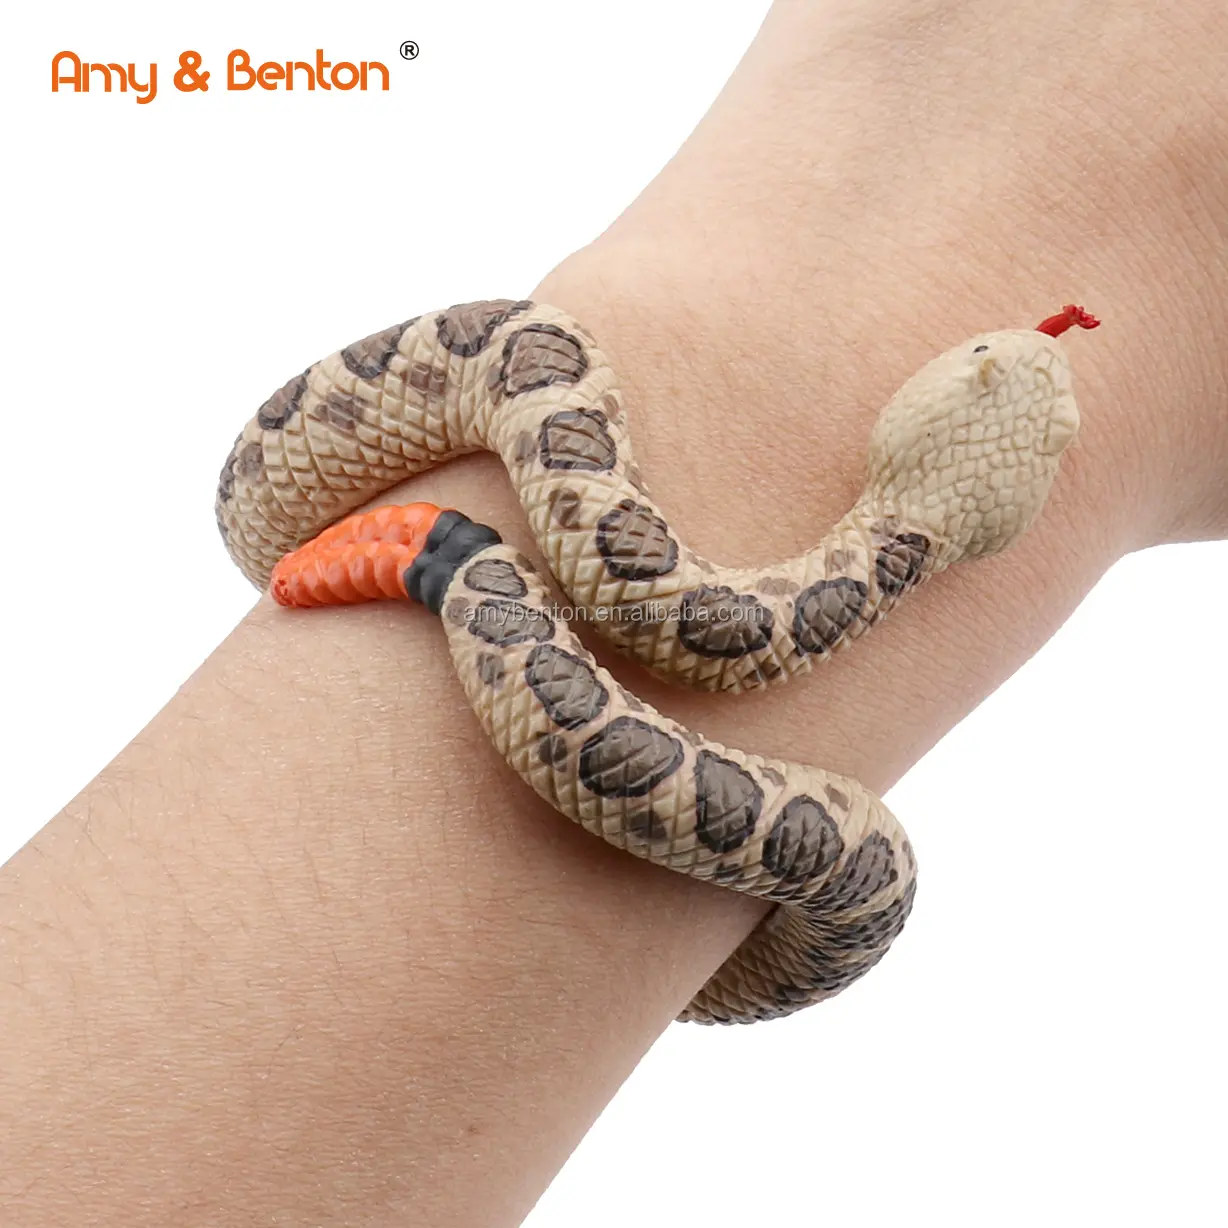 New Item Simulation Snake Bracelet Toys Novelty Toy For Kids